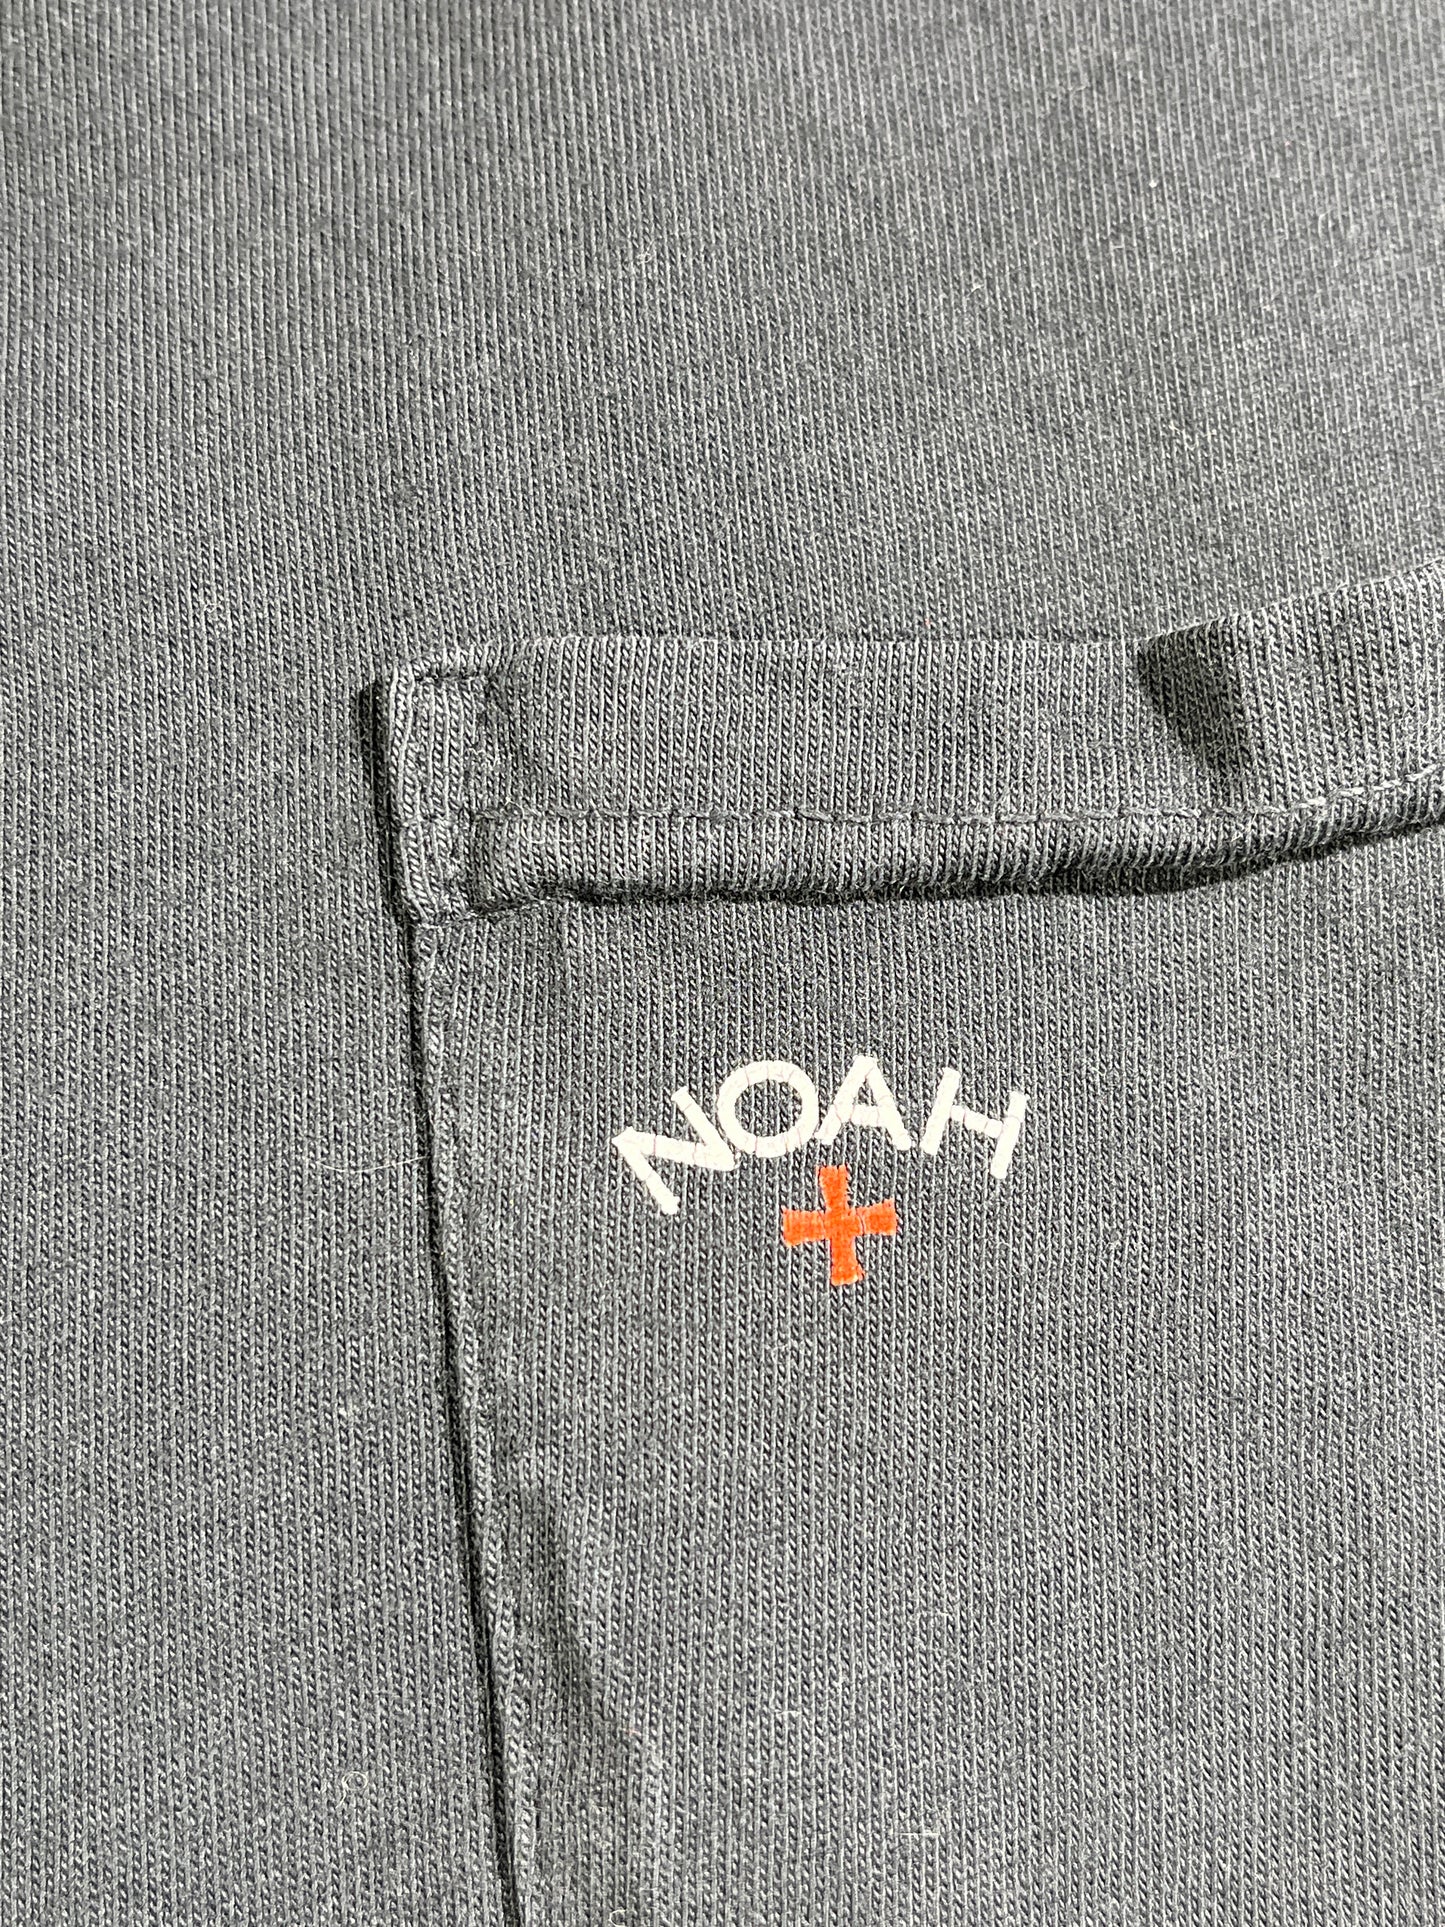 Vintage Noah T-Shirt Pocket Tee USA Made